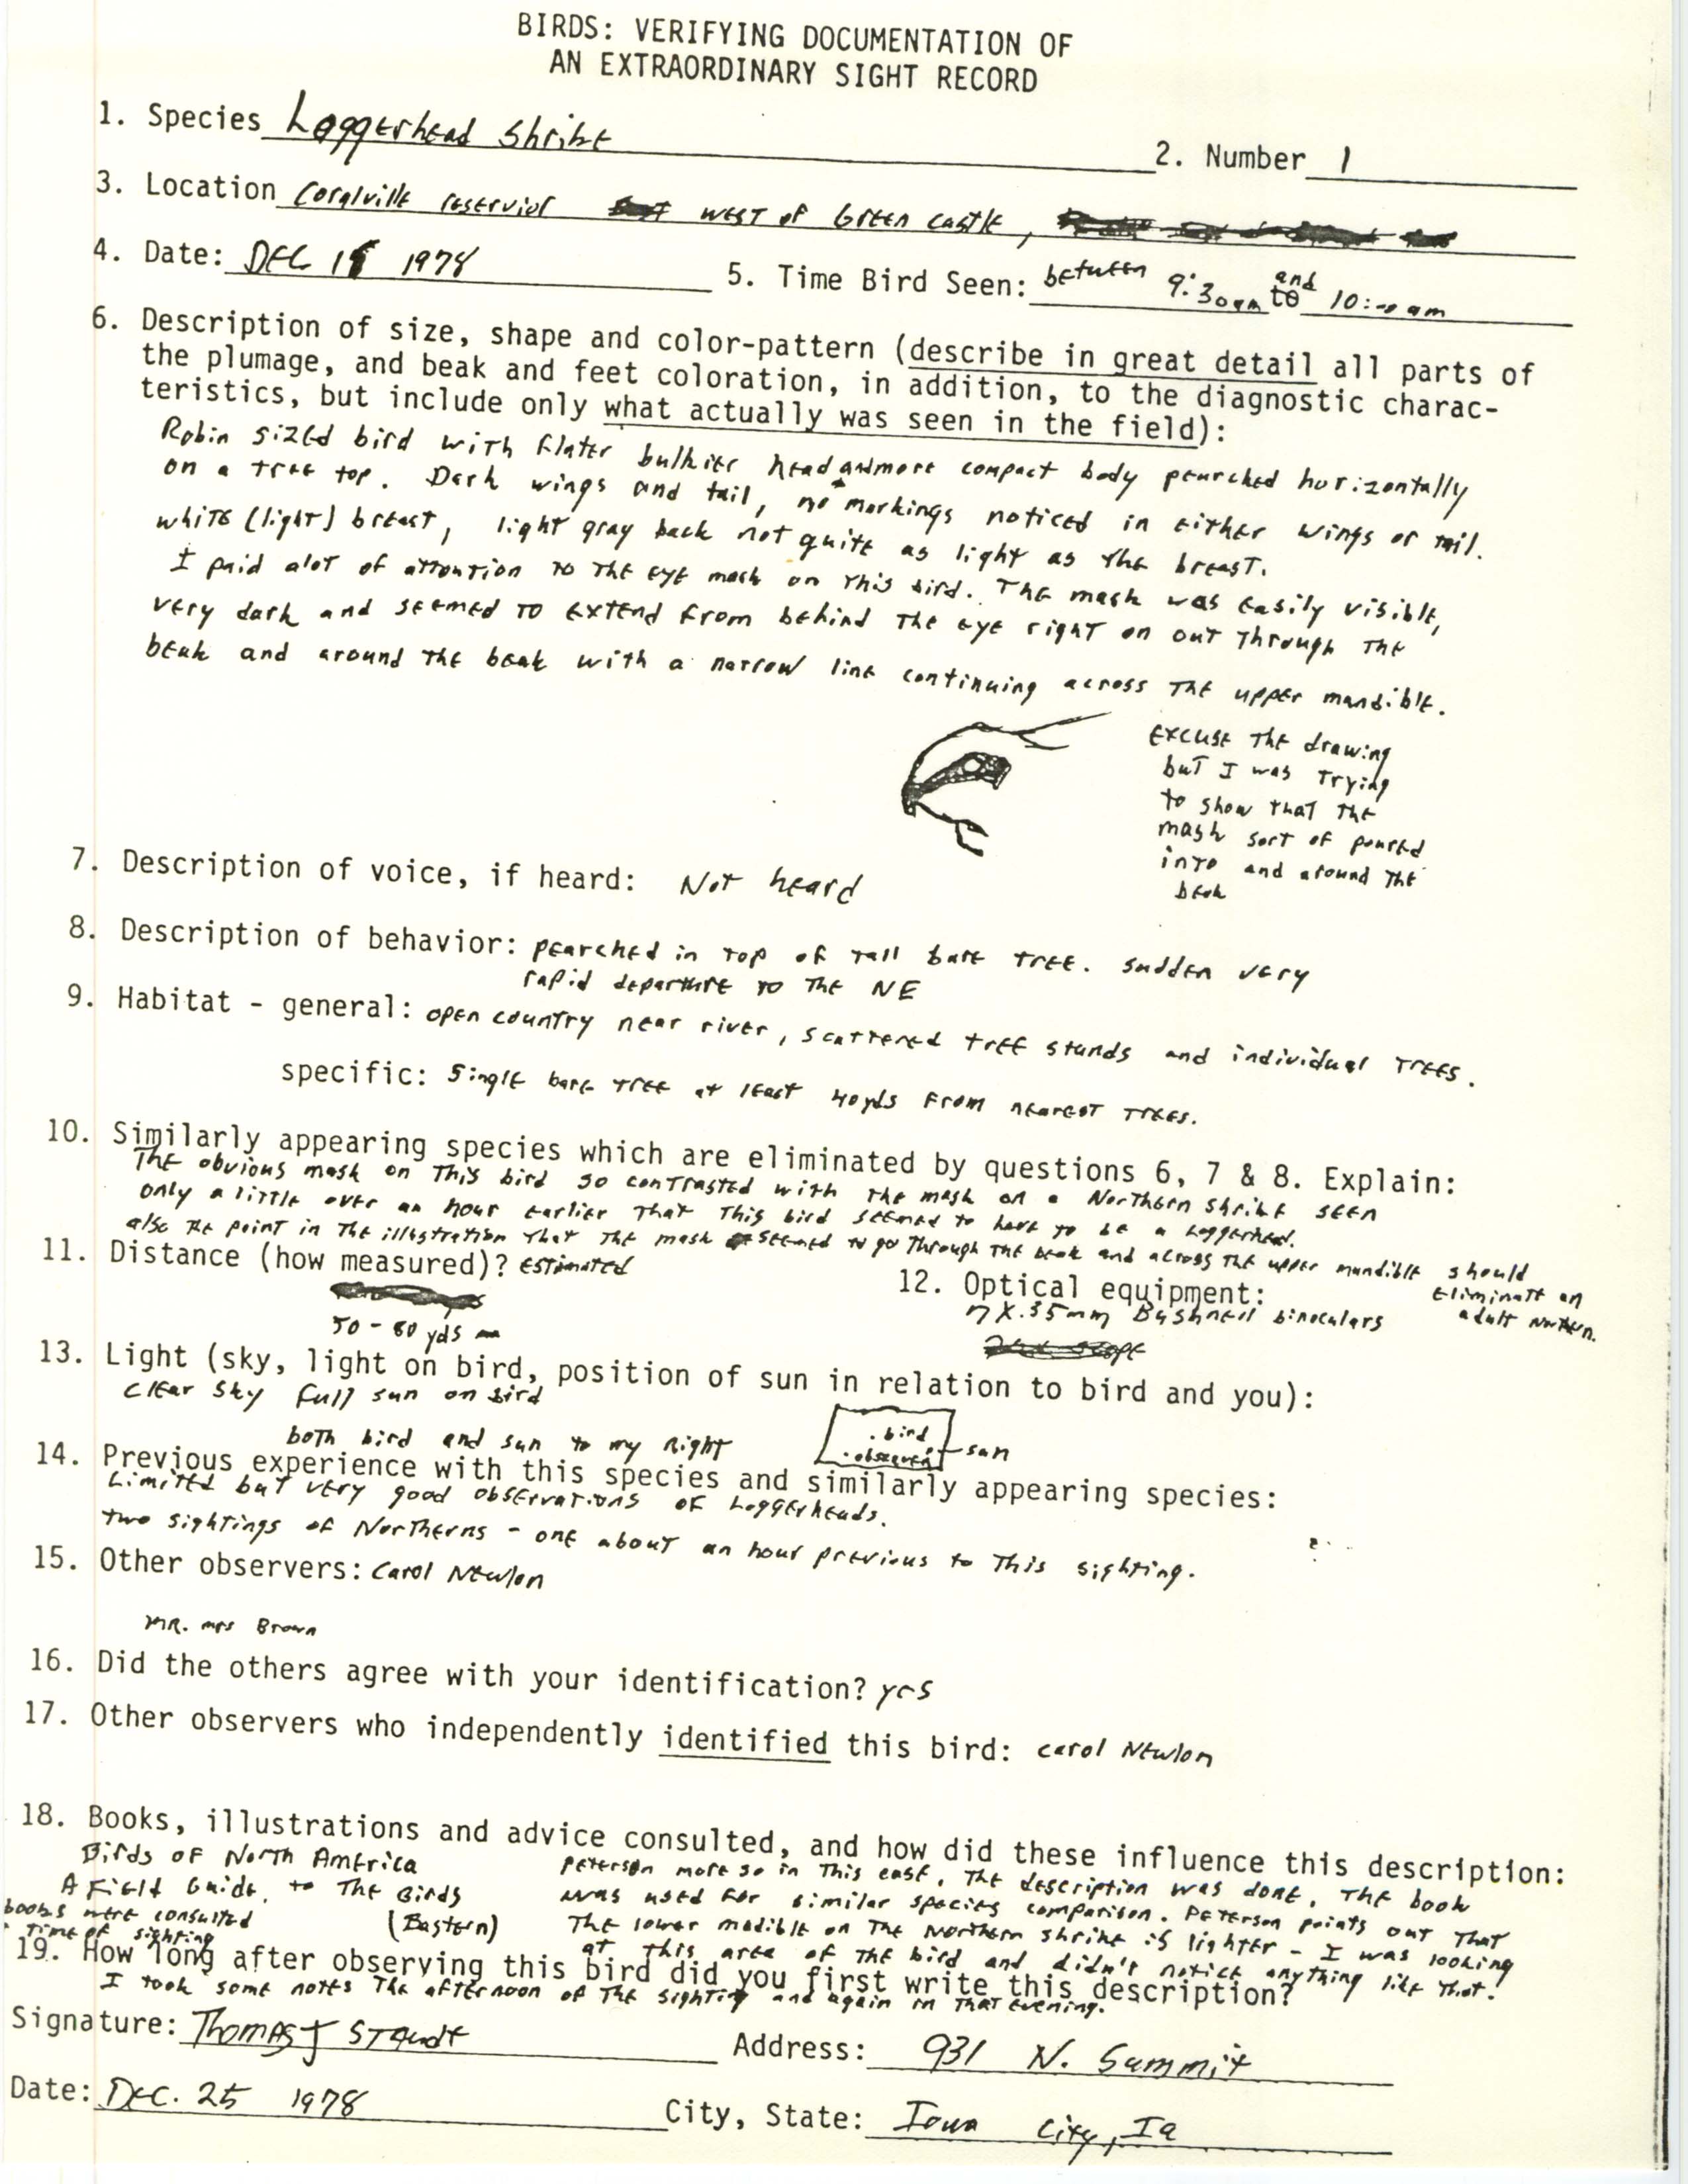 Rare bird documentation form for Loggerhead Shrike at Coralville Reservoir west of Green Castle, 1978